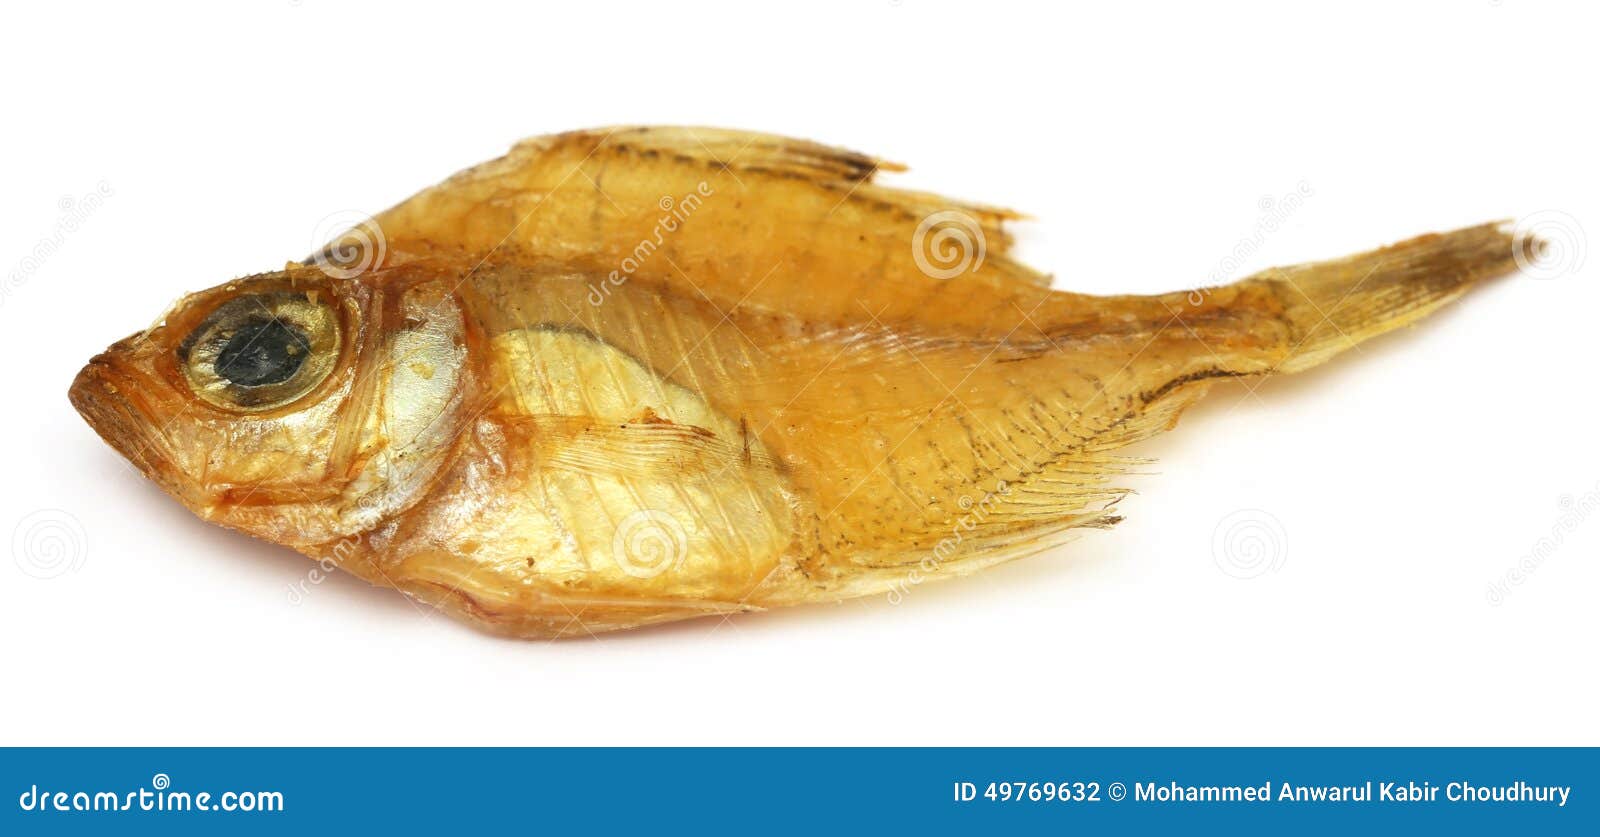 dried elongate glassy perchlet